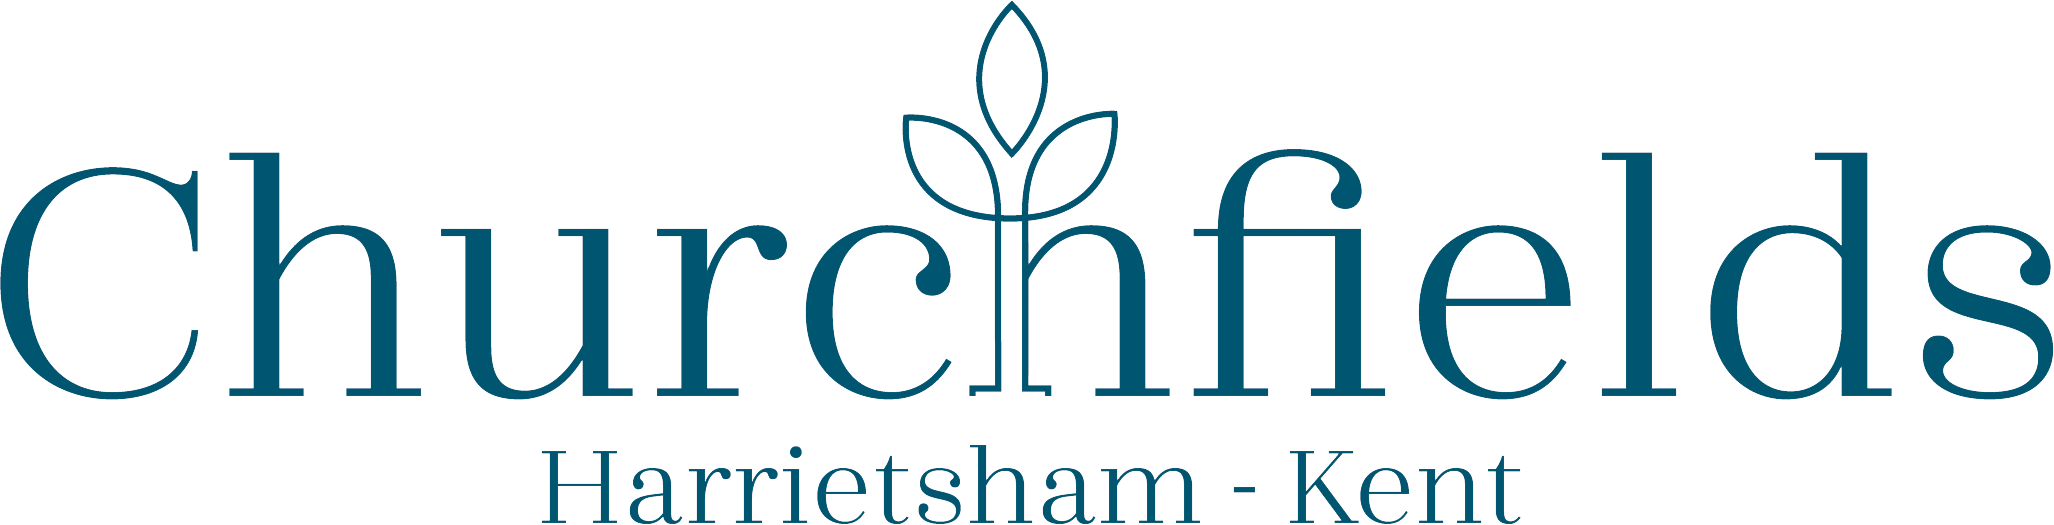 Churchfields logo.